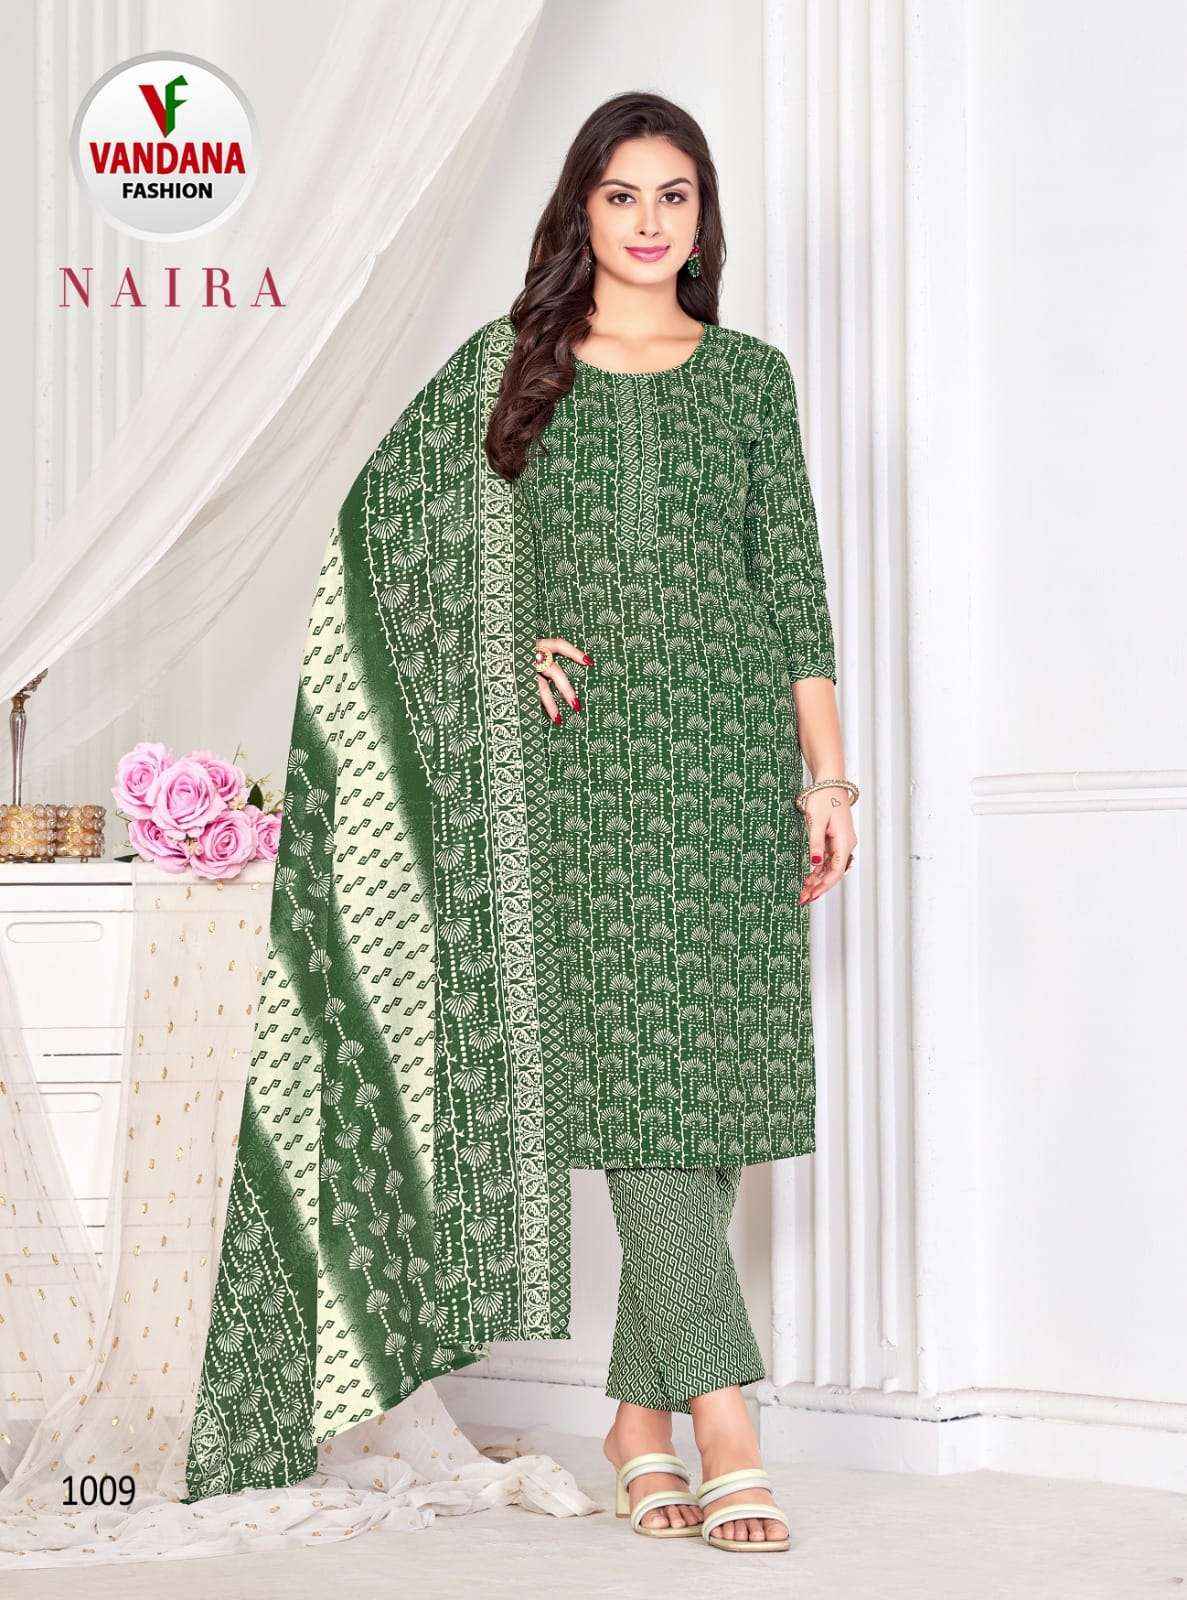 Vandana Fashion Naira Cotton Dress Material 10 pcs Catalogue